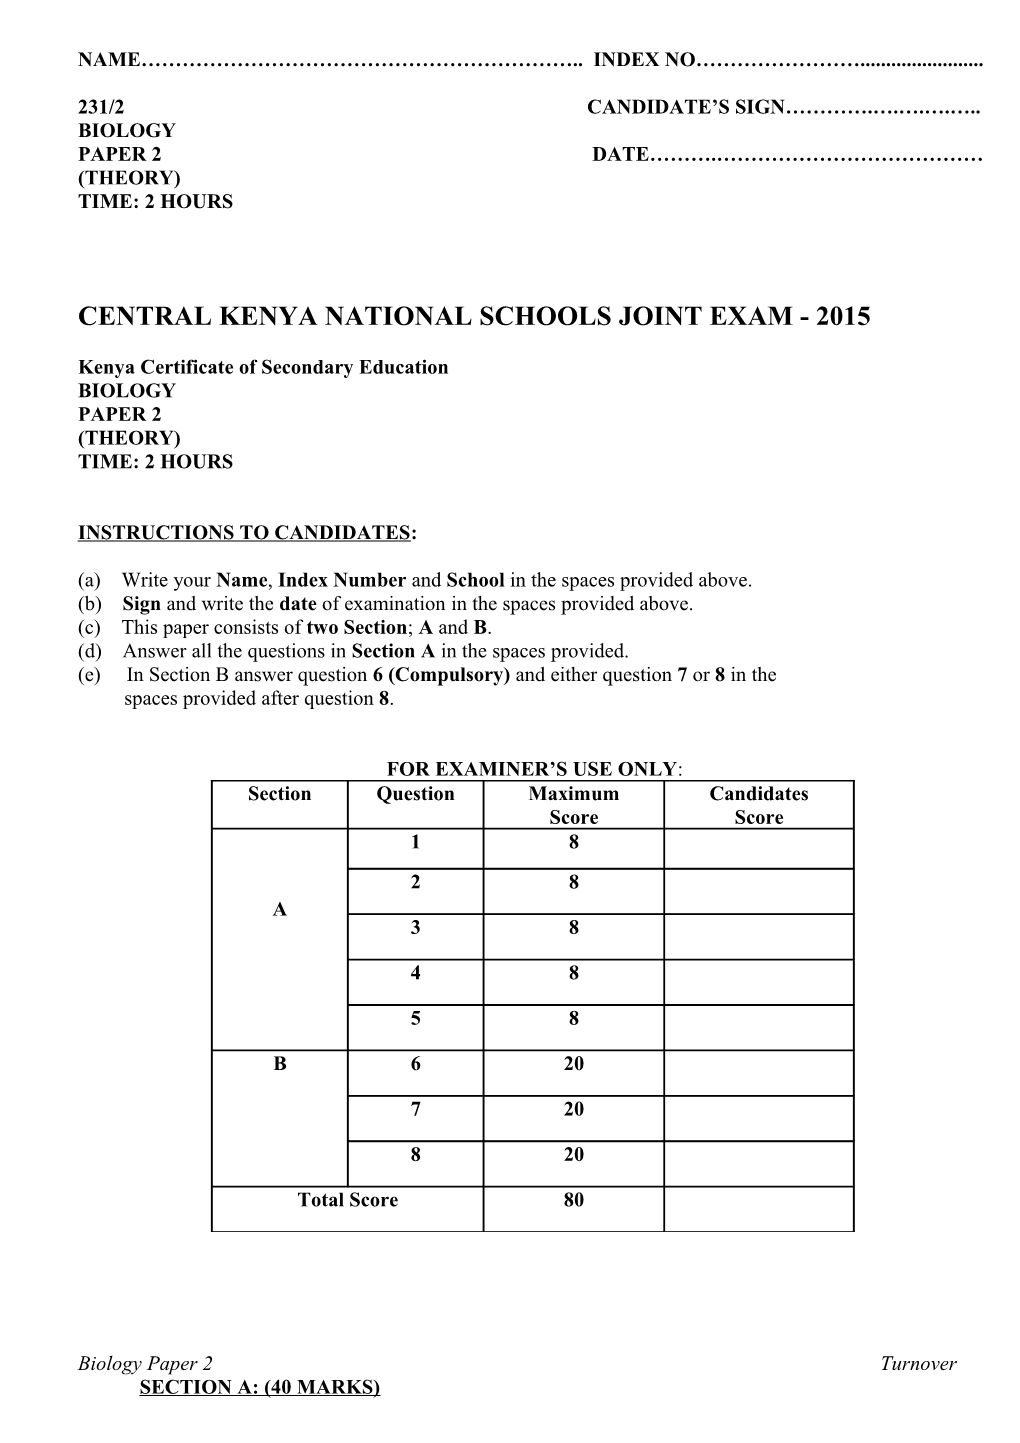 Central Kenya National Schools Joint Exam - 2015